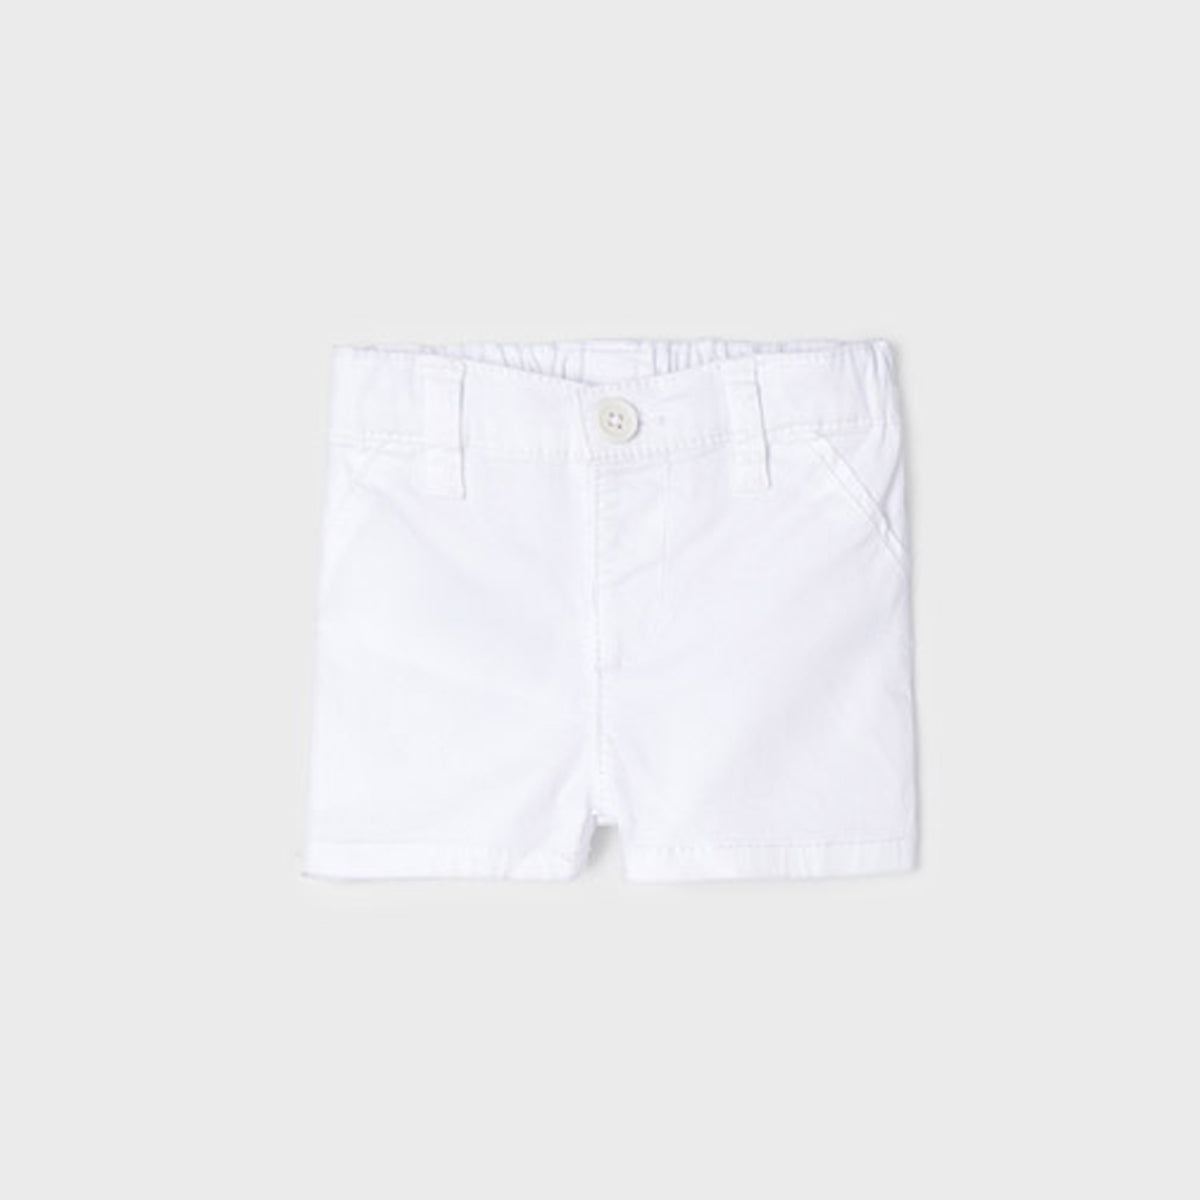 White Twill Shorts